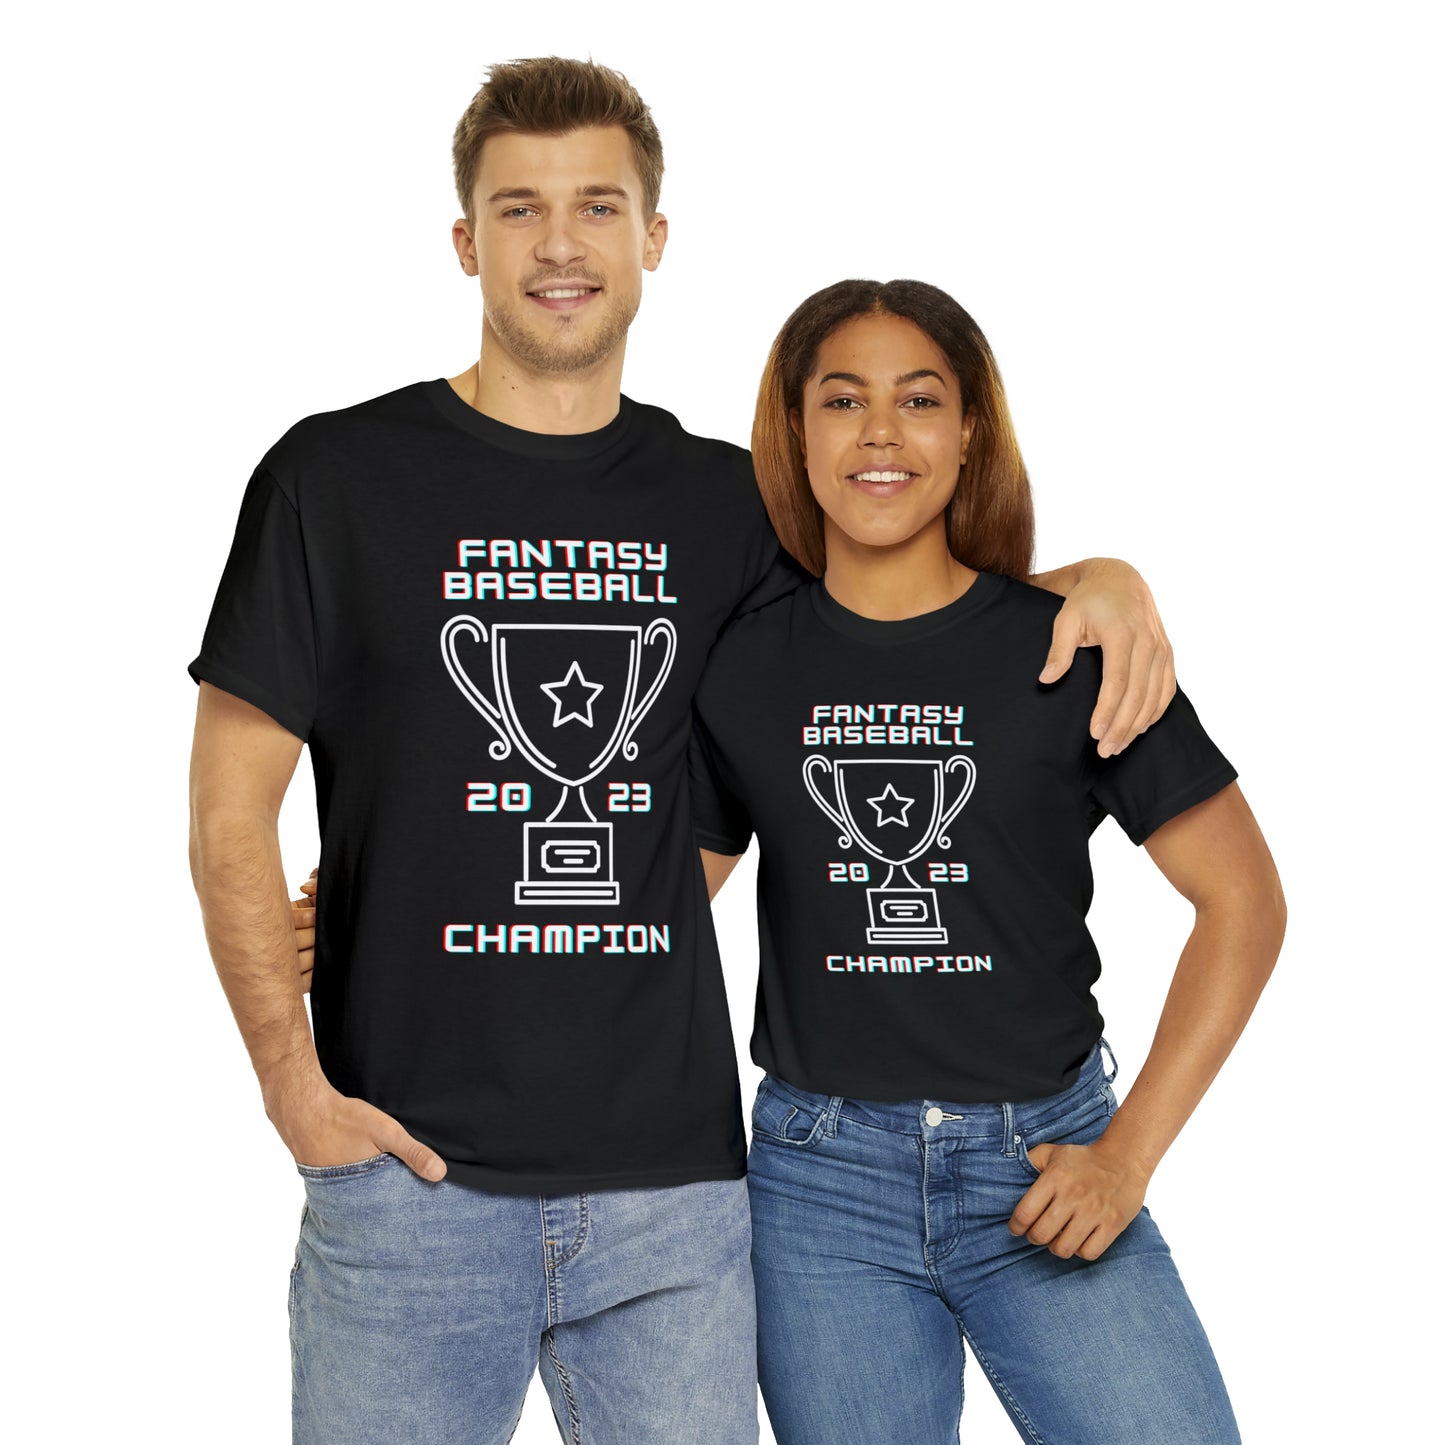 2023 Fantasy Baseball Champion Fantasy Champ T-Shirt | Unisex Tee Shirt